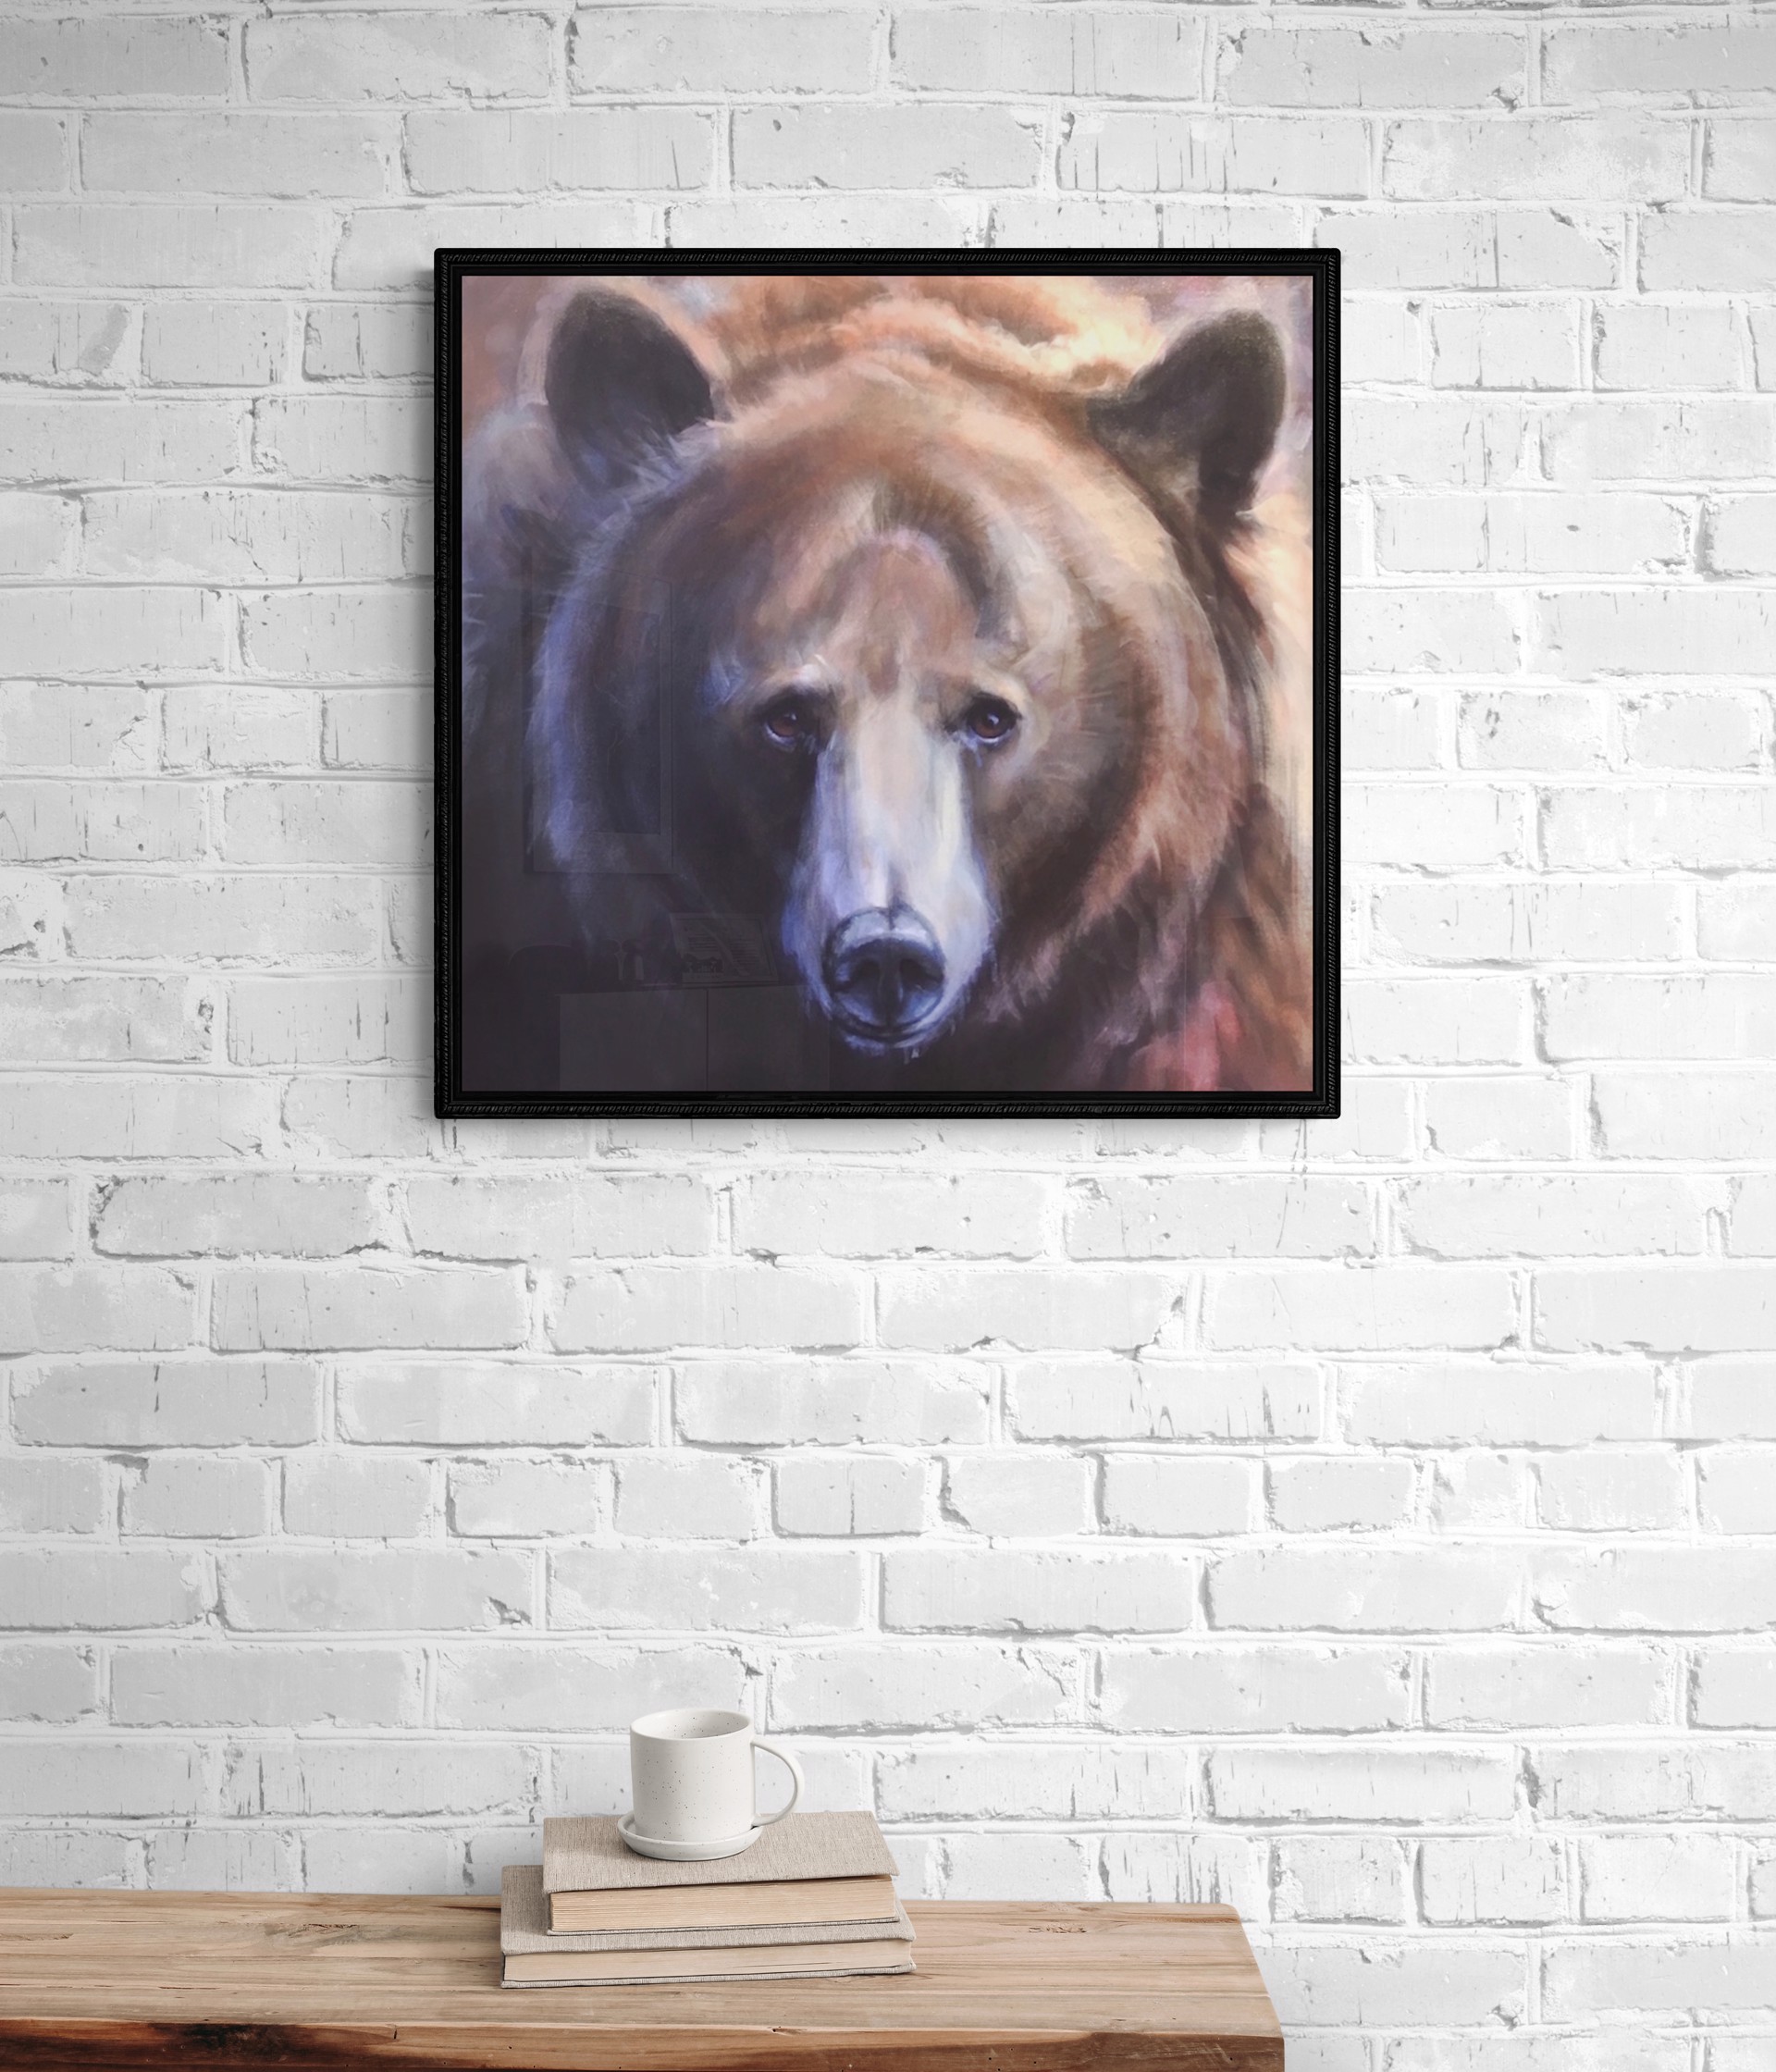 A Watchful Gaze - Cinnamon Bear by Sharon Smith